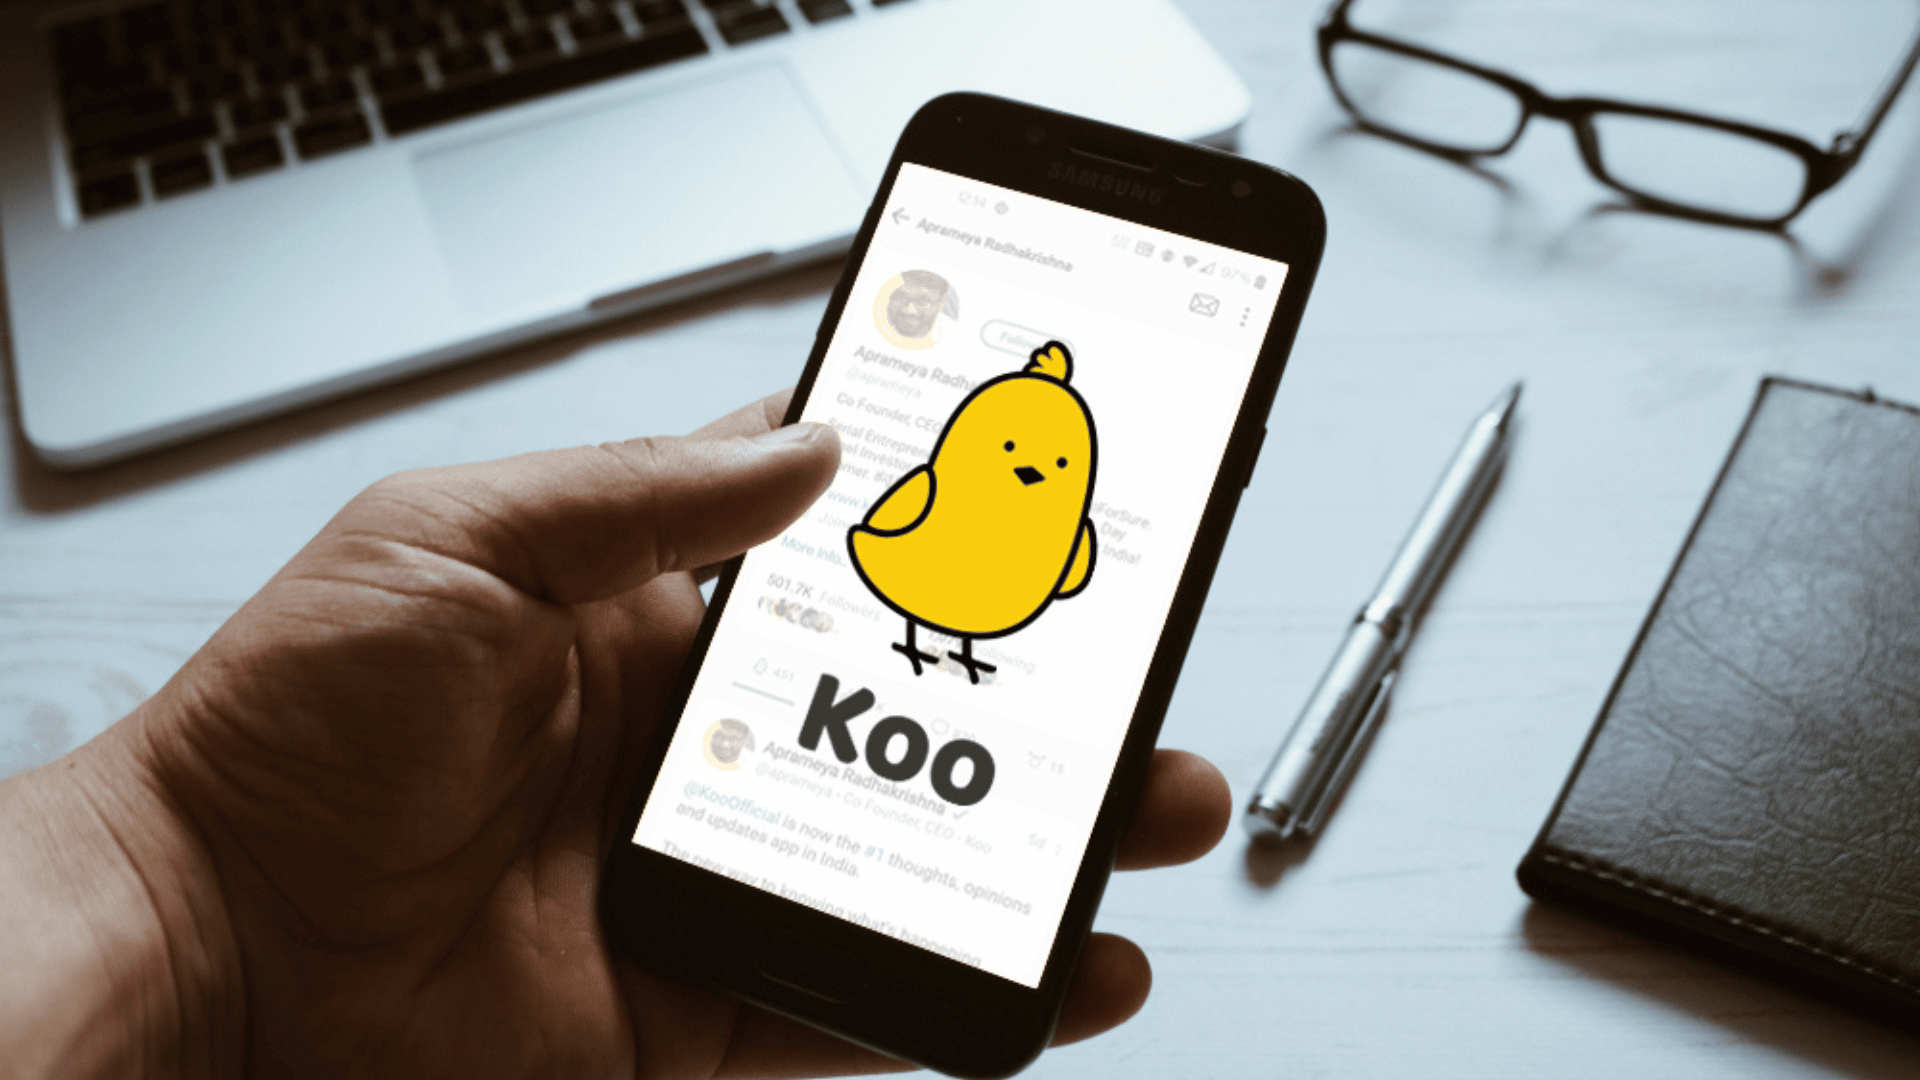 Koo emerges as largest Hindi micro-blogging platform in India